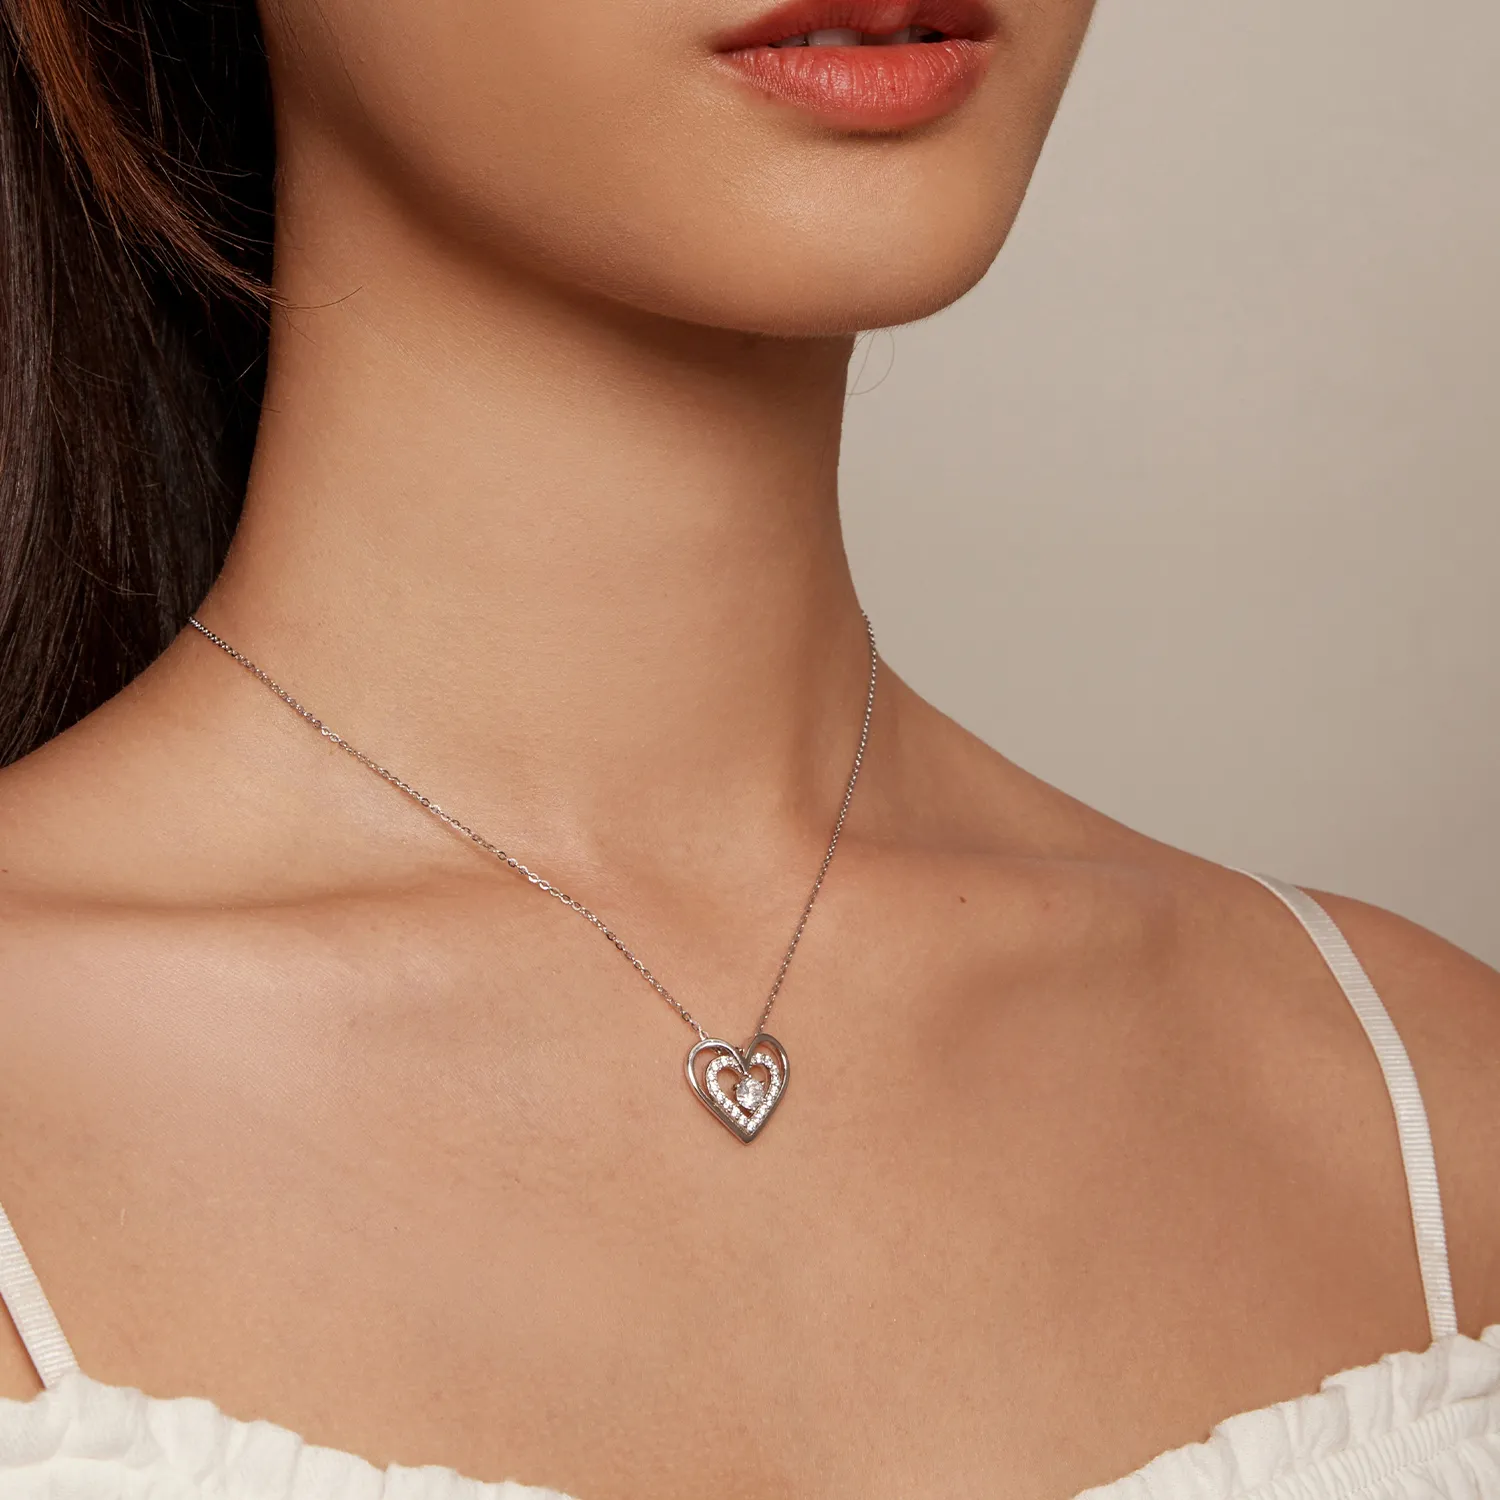 Pandora Style Heart Necklace - BSN342